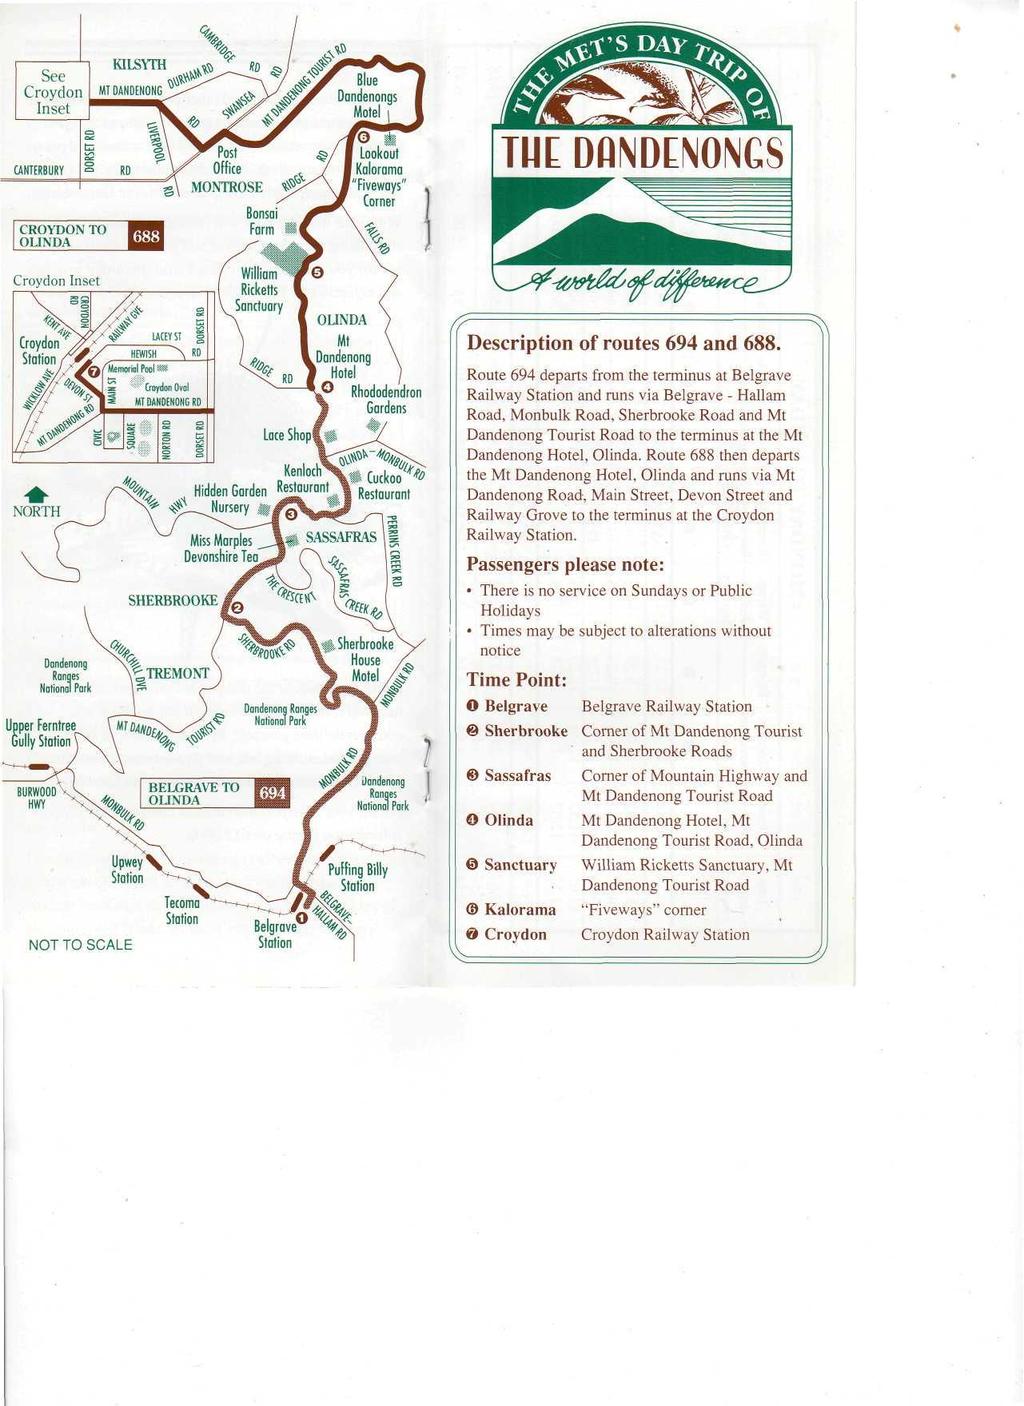 Lookout Kolorama "Fiveways" Corner DflNDENONGS Description of routes 694 and 688.